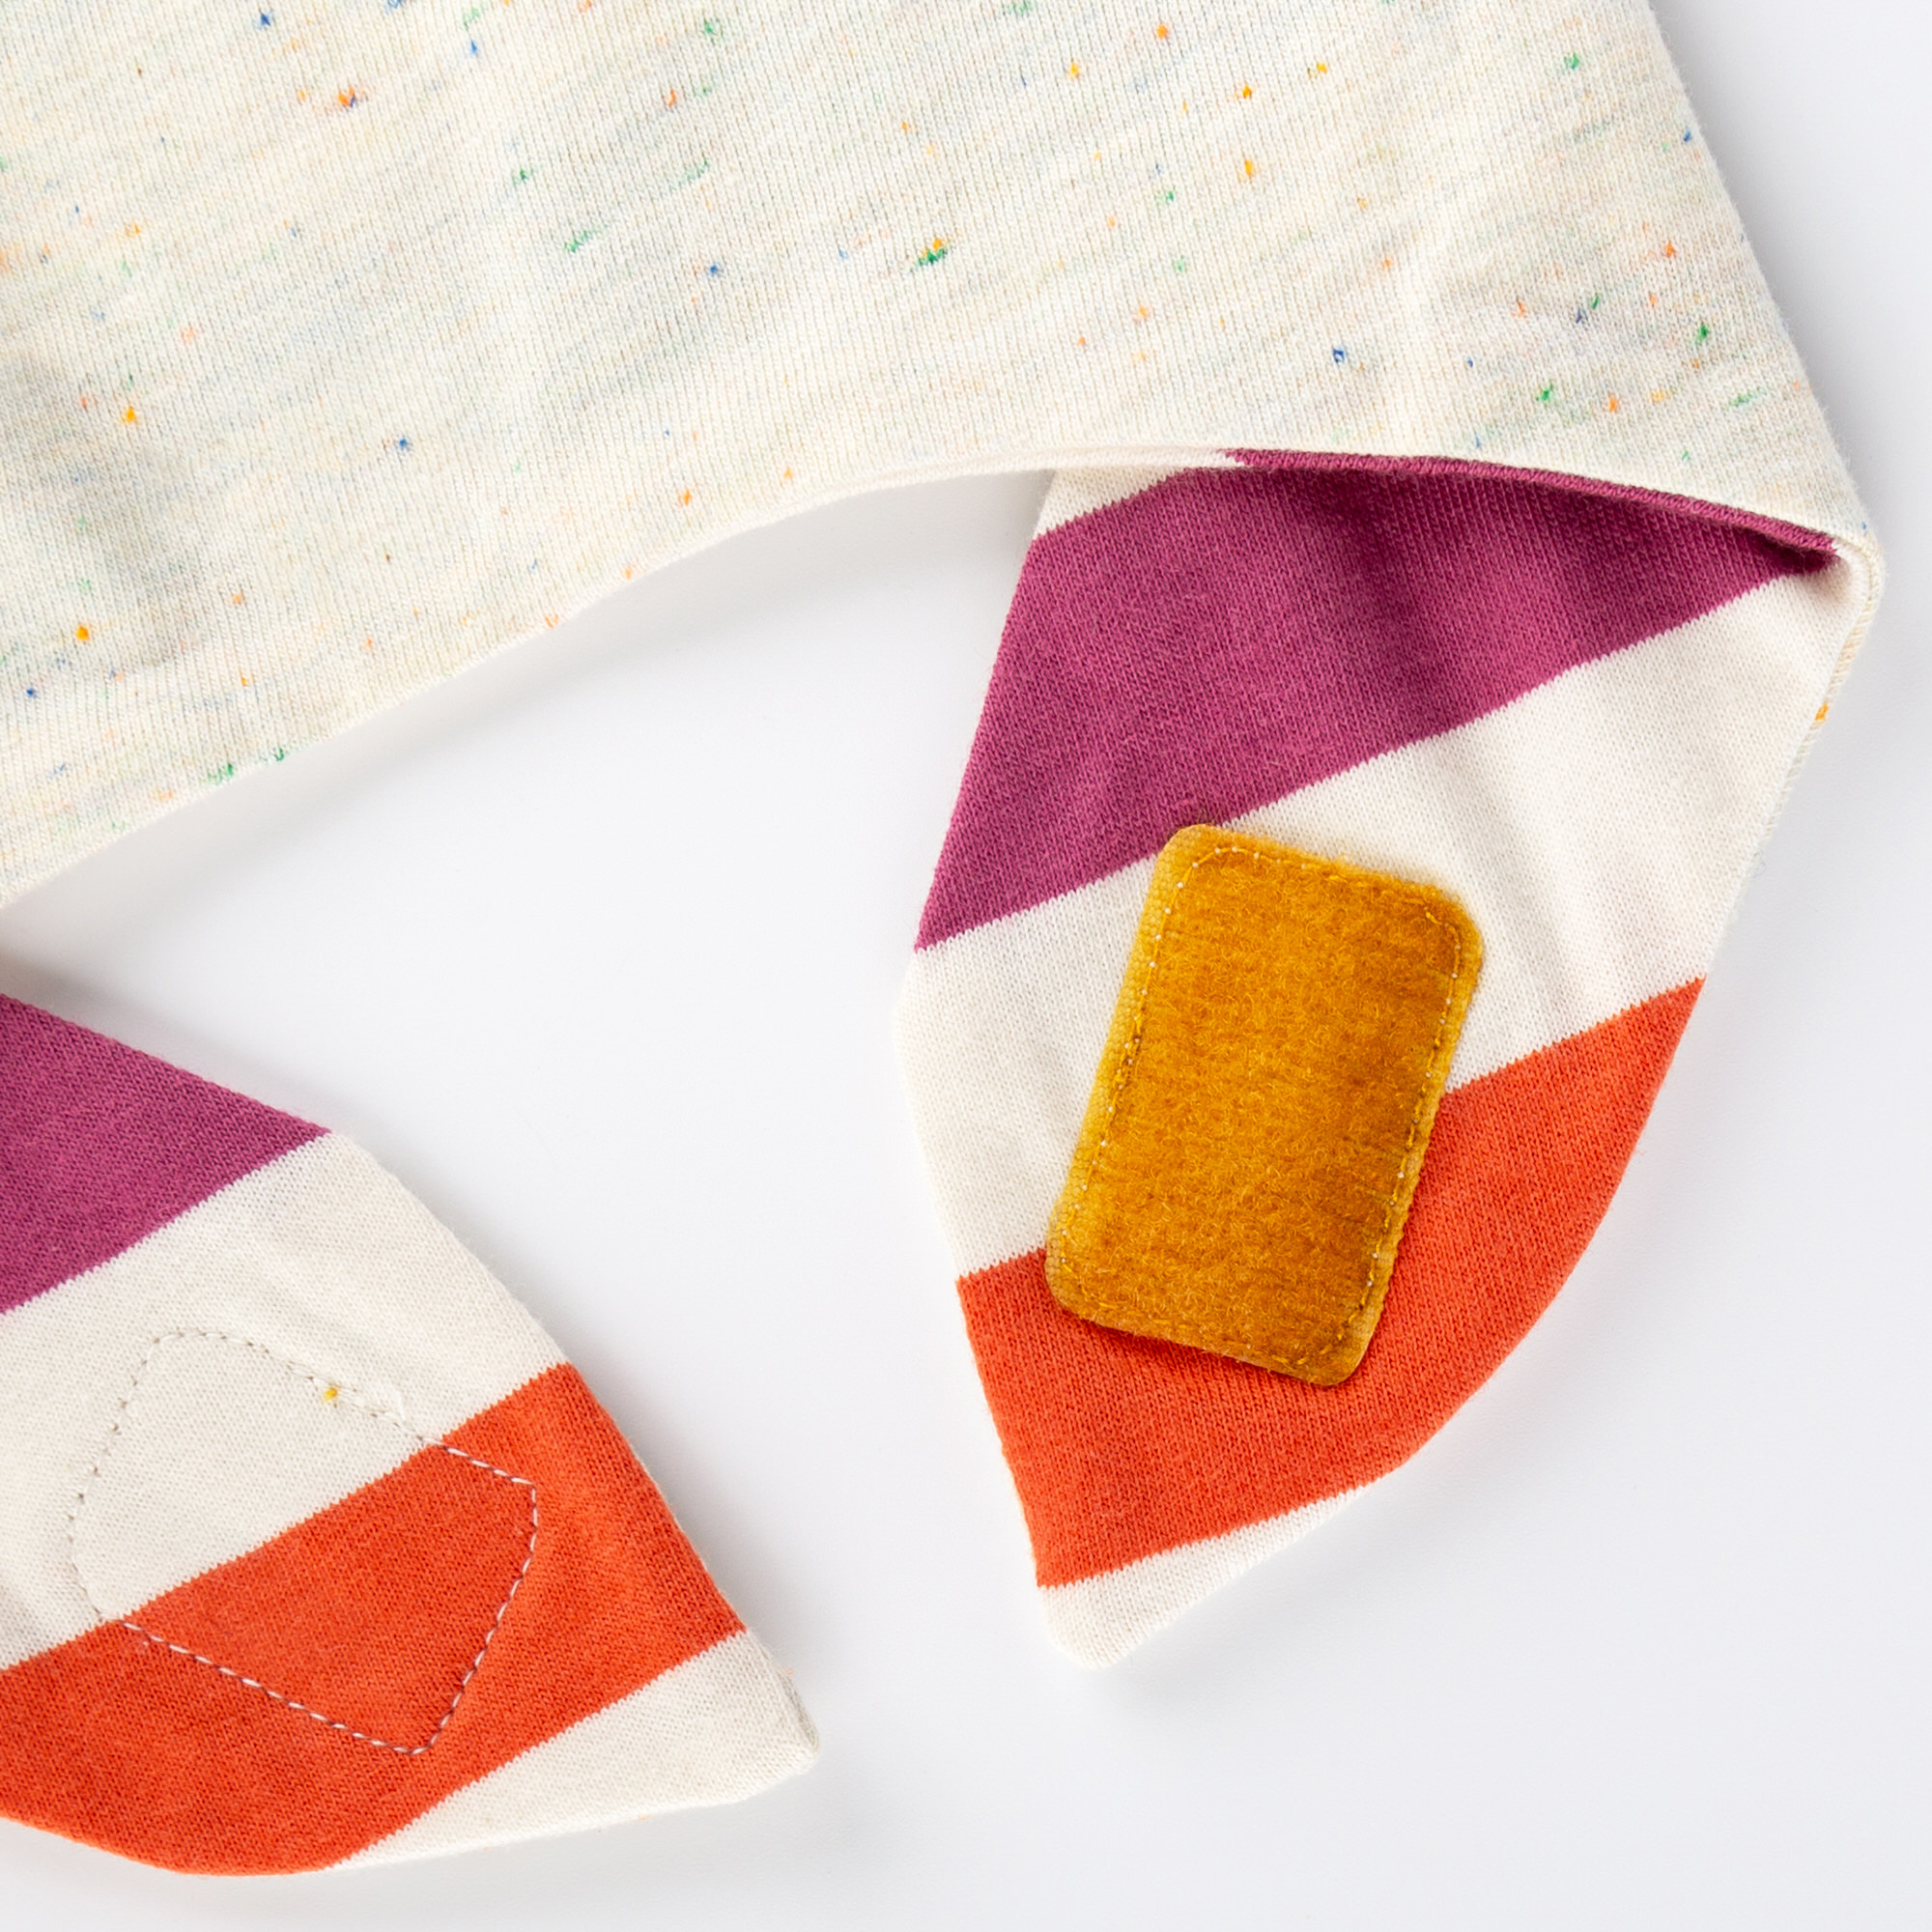 Snug reversible baby bandana bib, beige/multicoloured